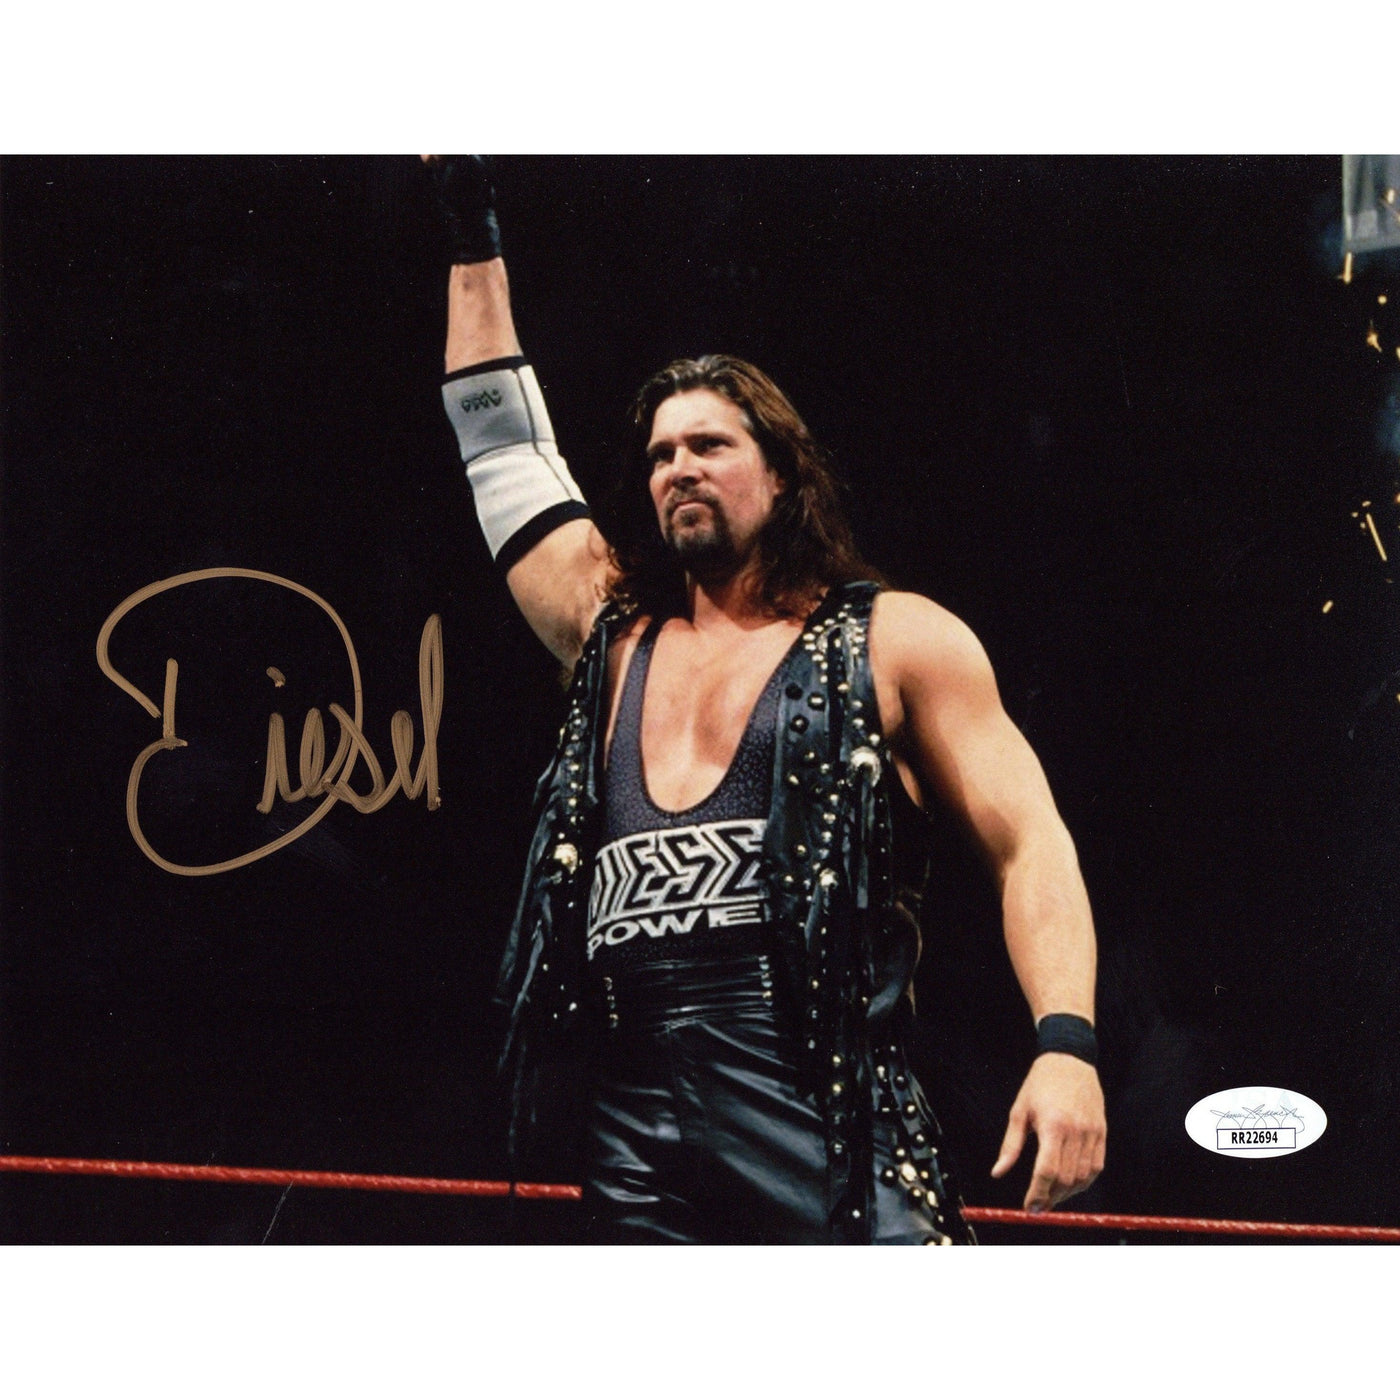 Kevin Nash Signed 8x10 Photo WWE WWF Diesel Autographed JSA COA 2